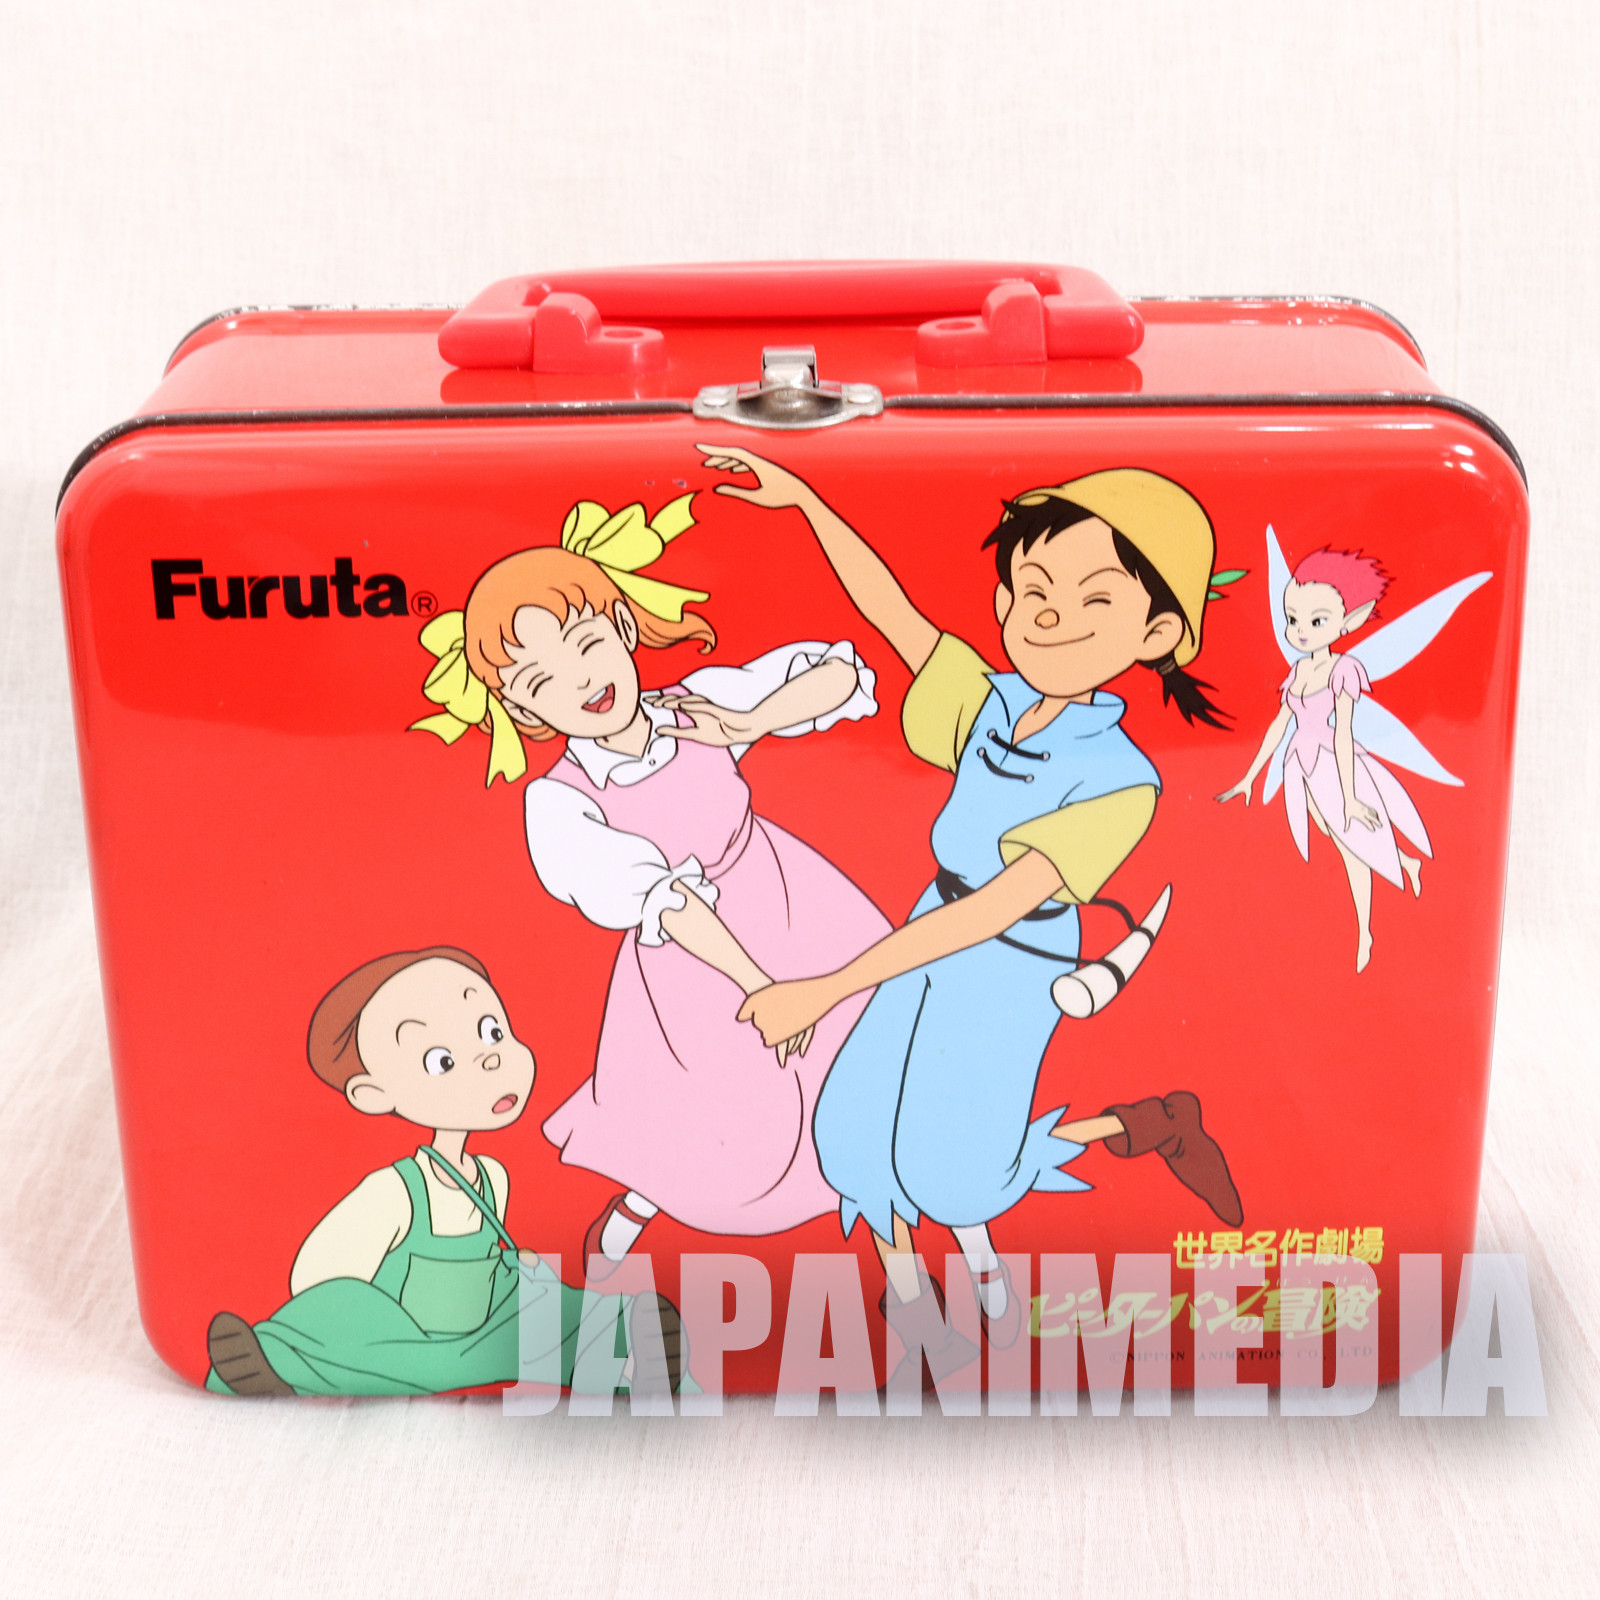 Adventures of Peter Pan World Masterpiece Theater Metallic Can Box JAPAN ANIME